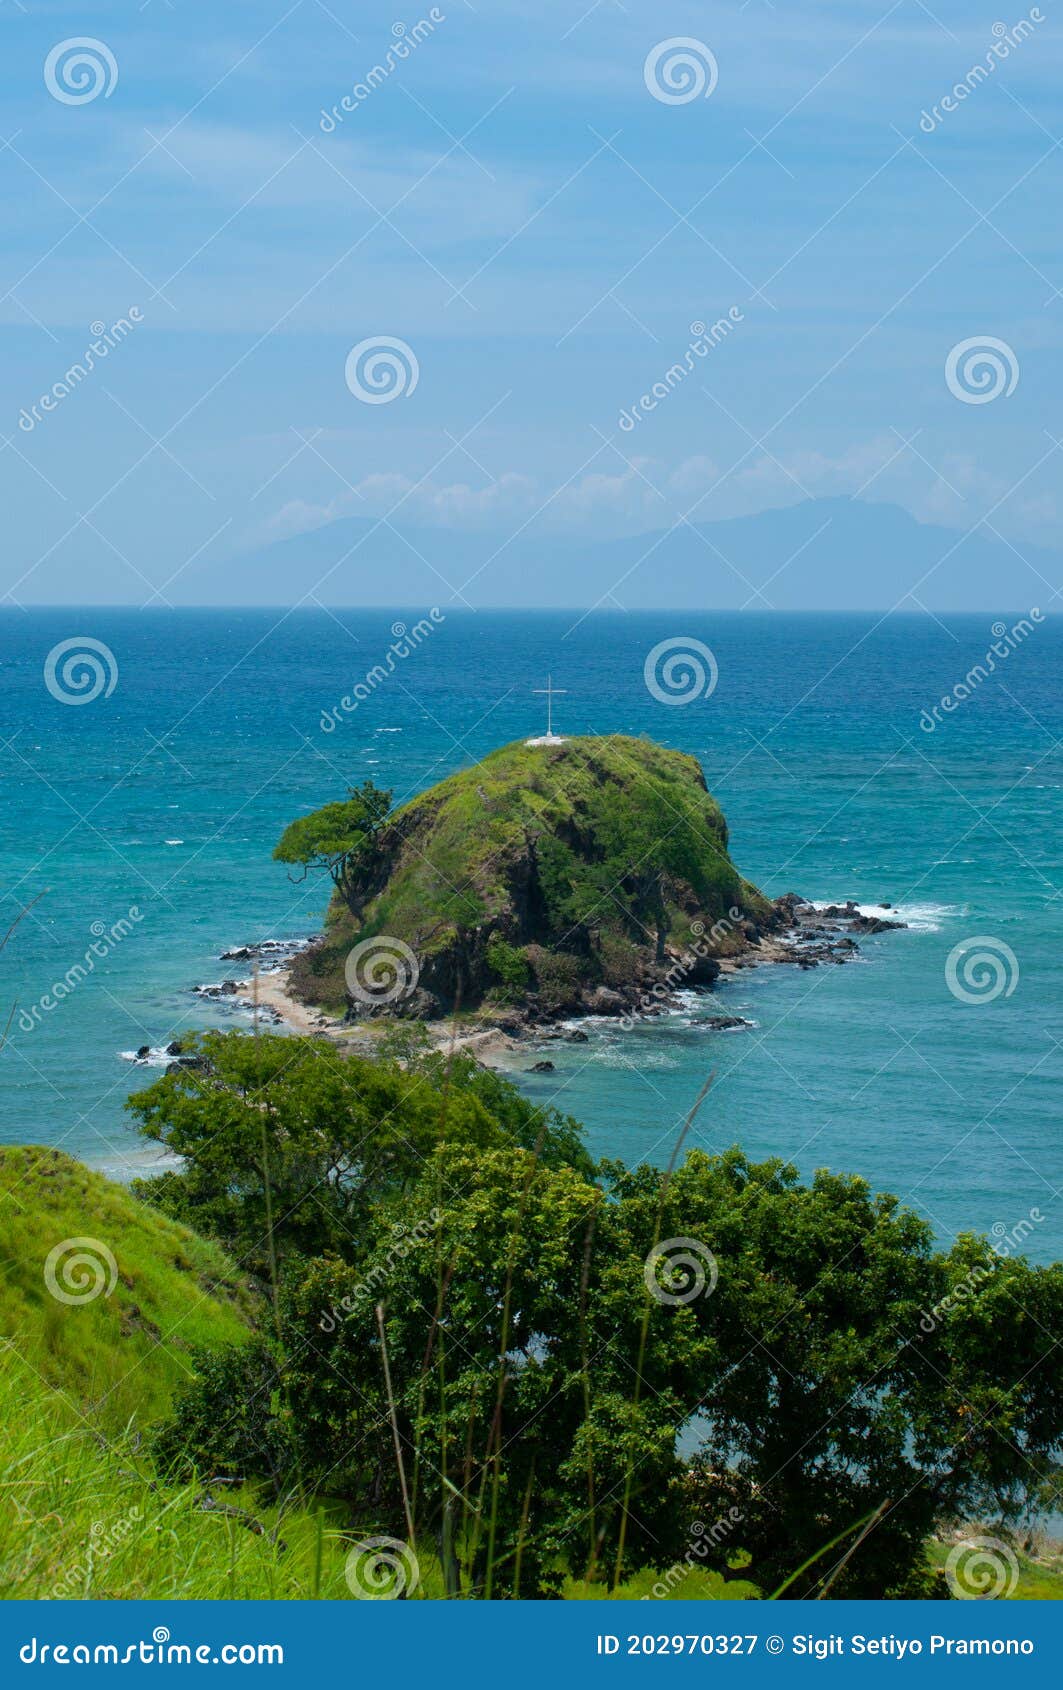 a beautiful small island in manatuto timor leste